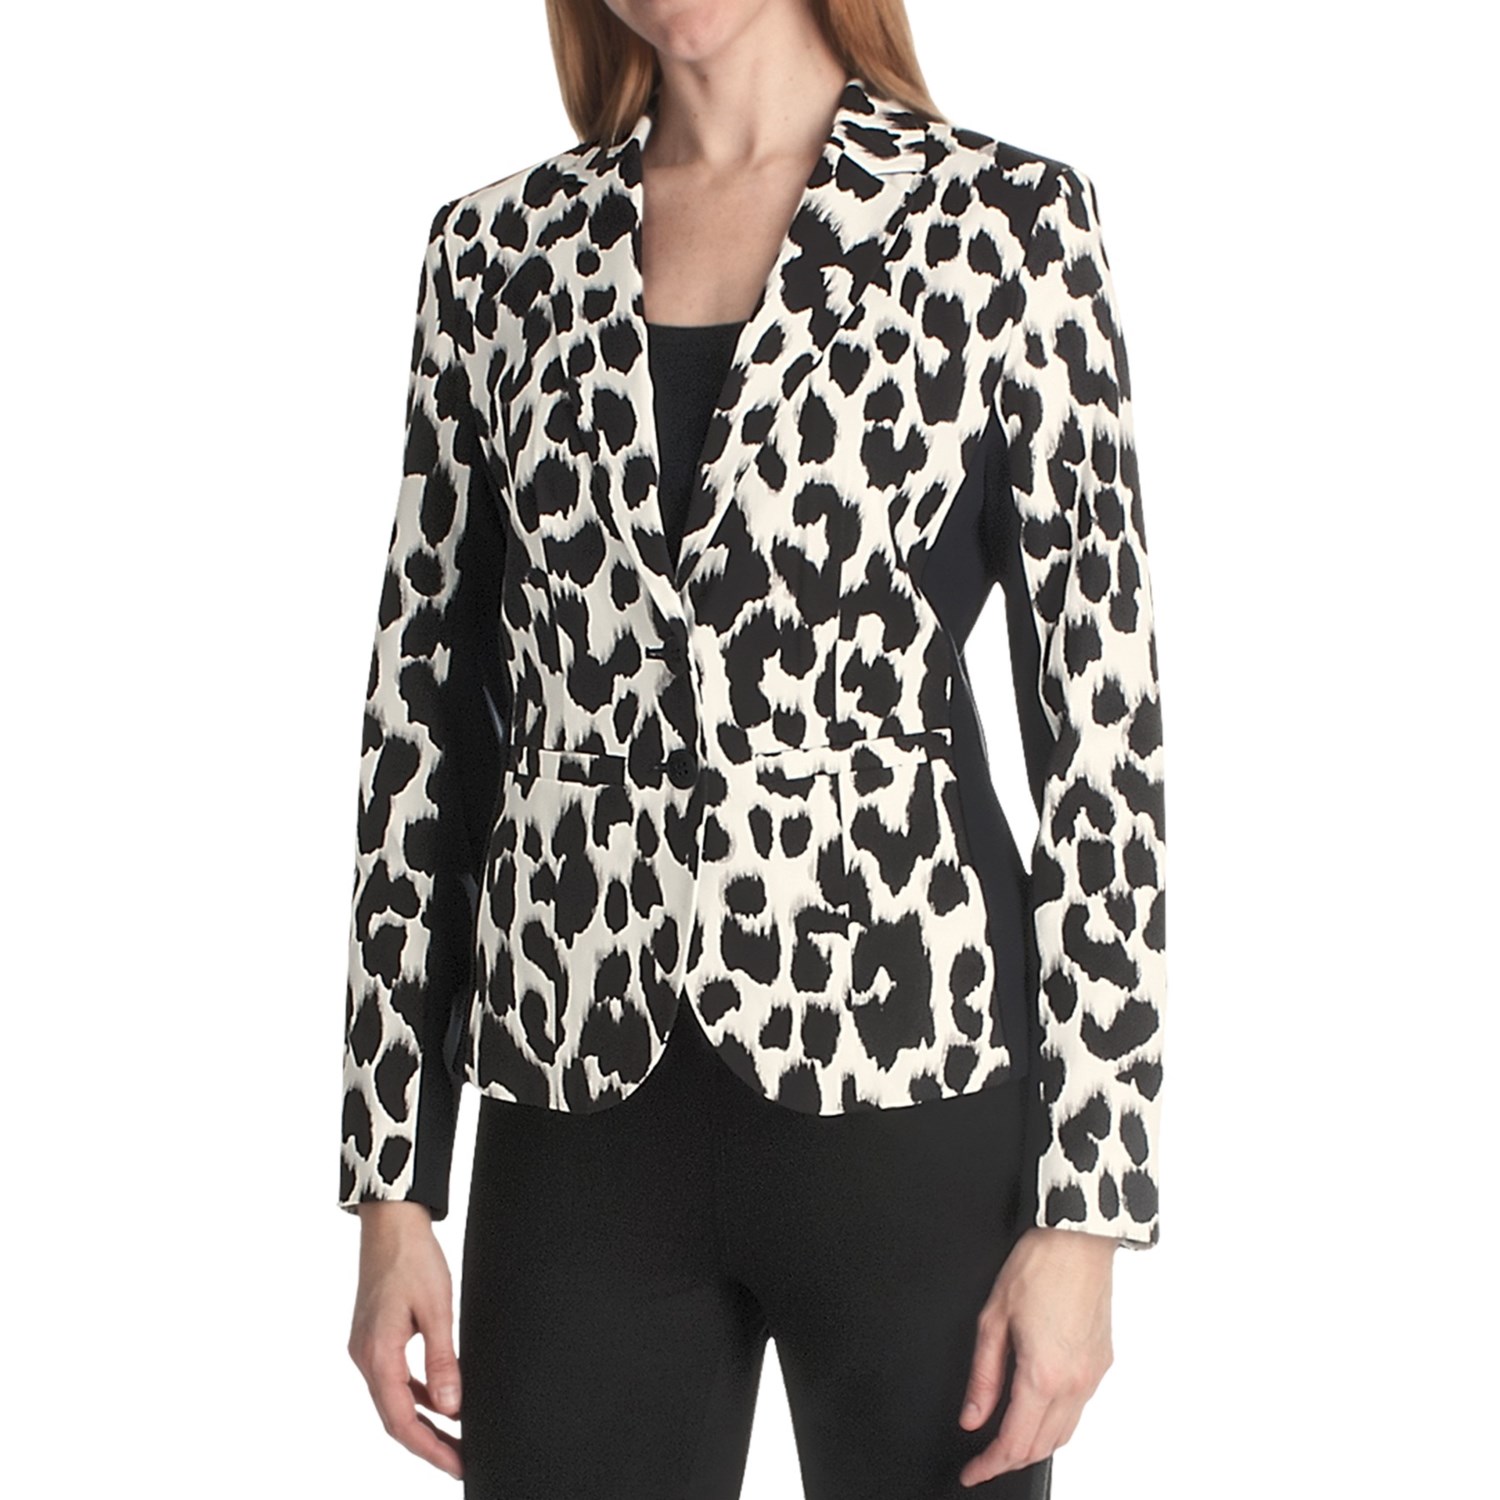 Paperwhite Animal Print Jacket (For Women) 5798K - Save 90%